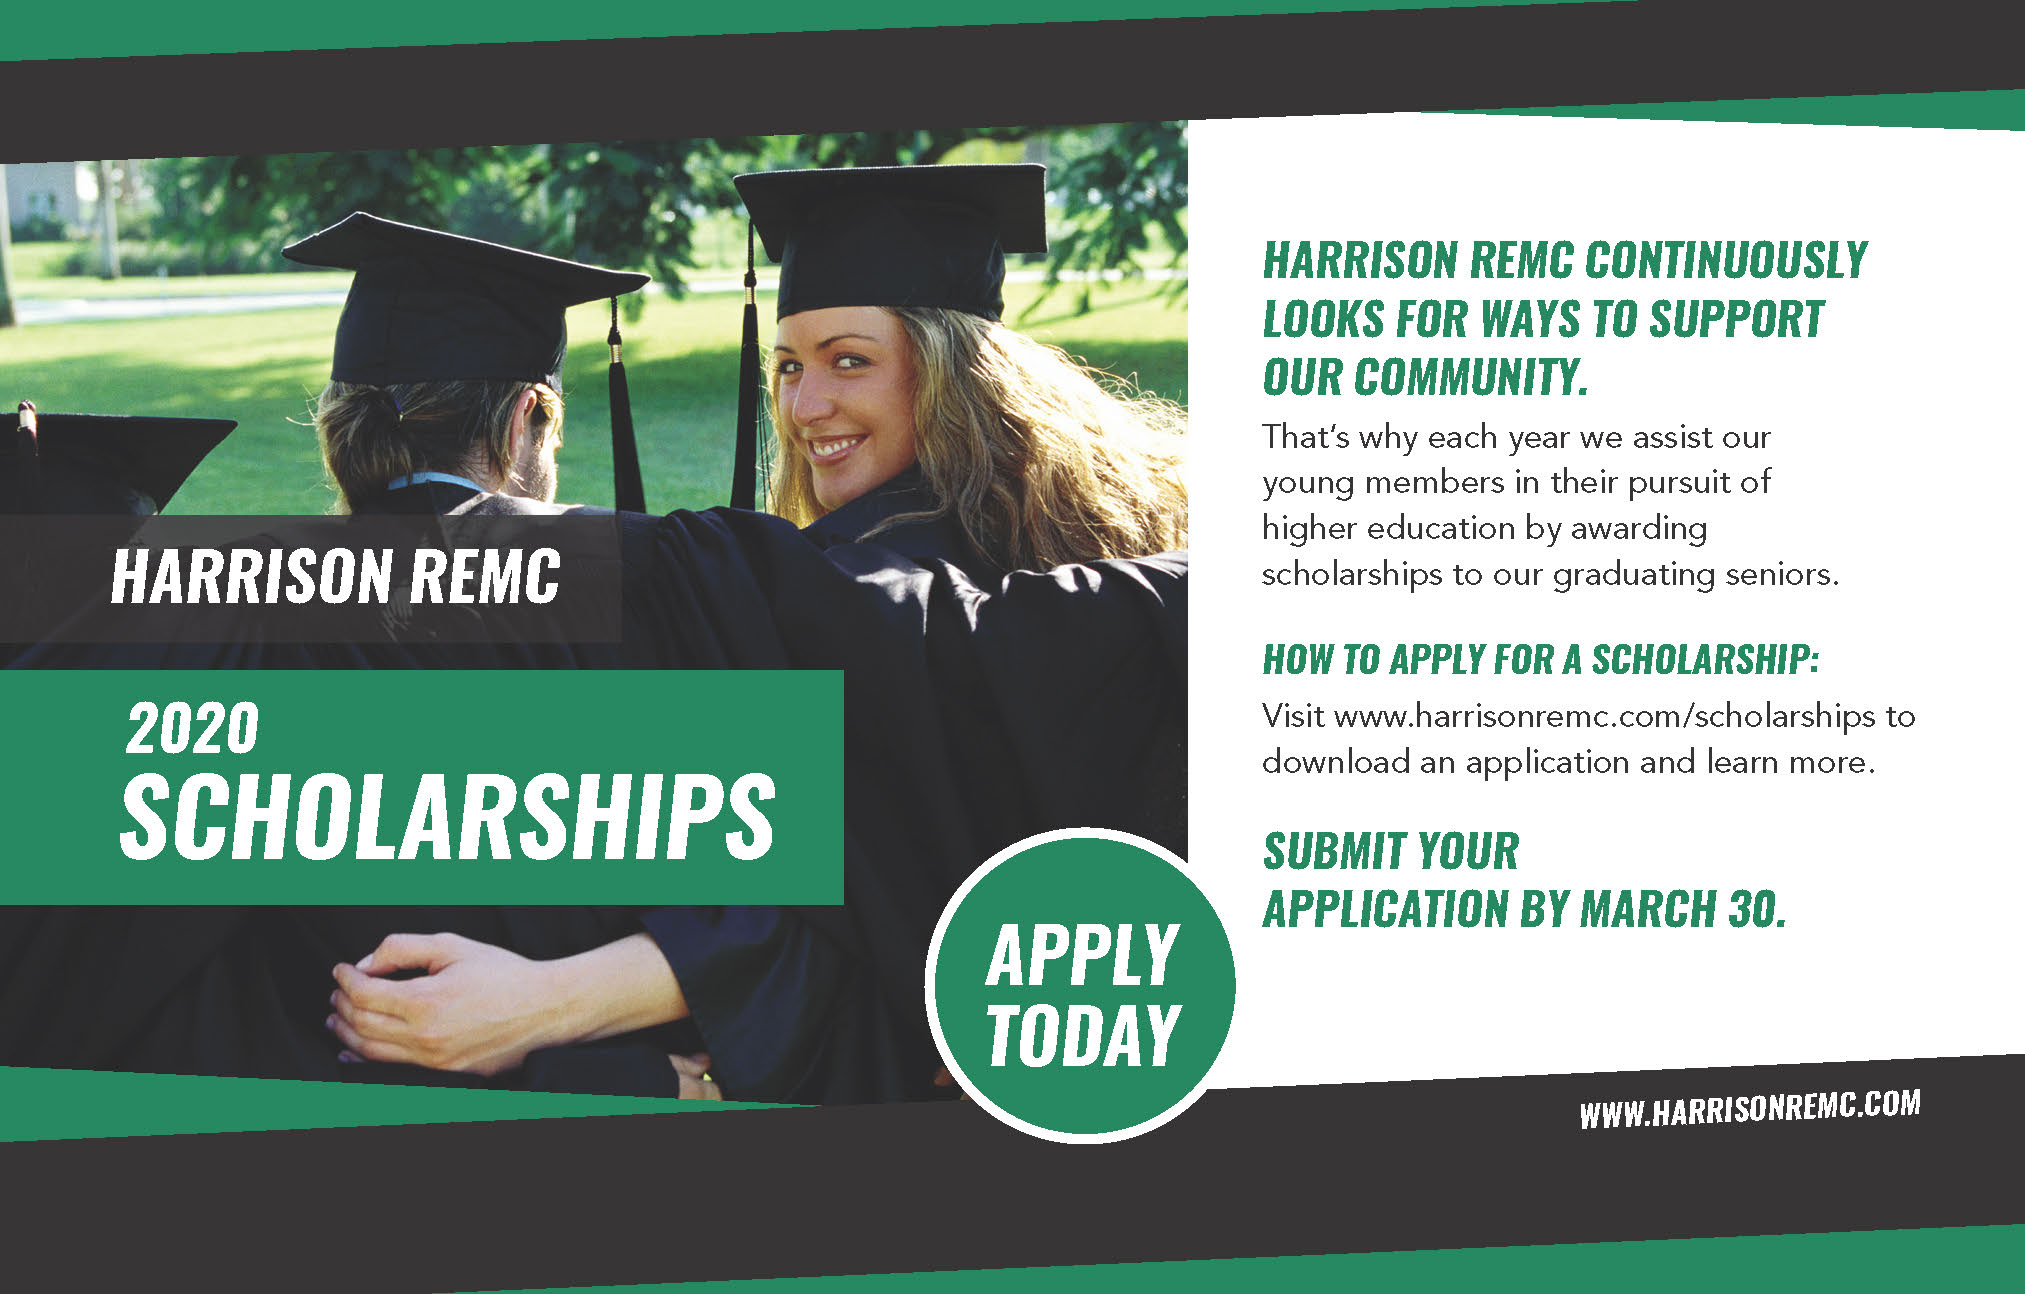 Ad for Harrison REMC scholarships